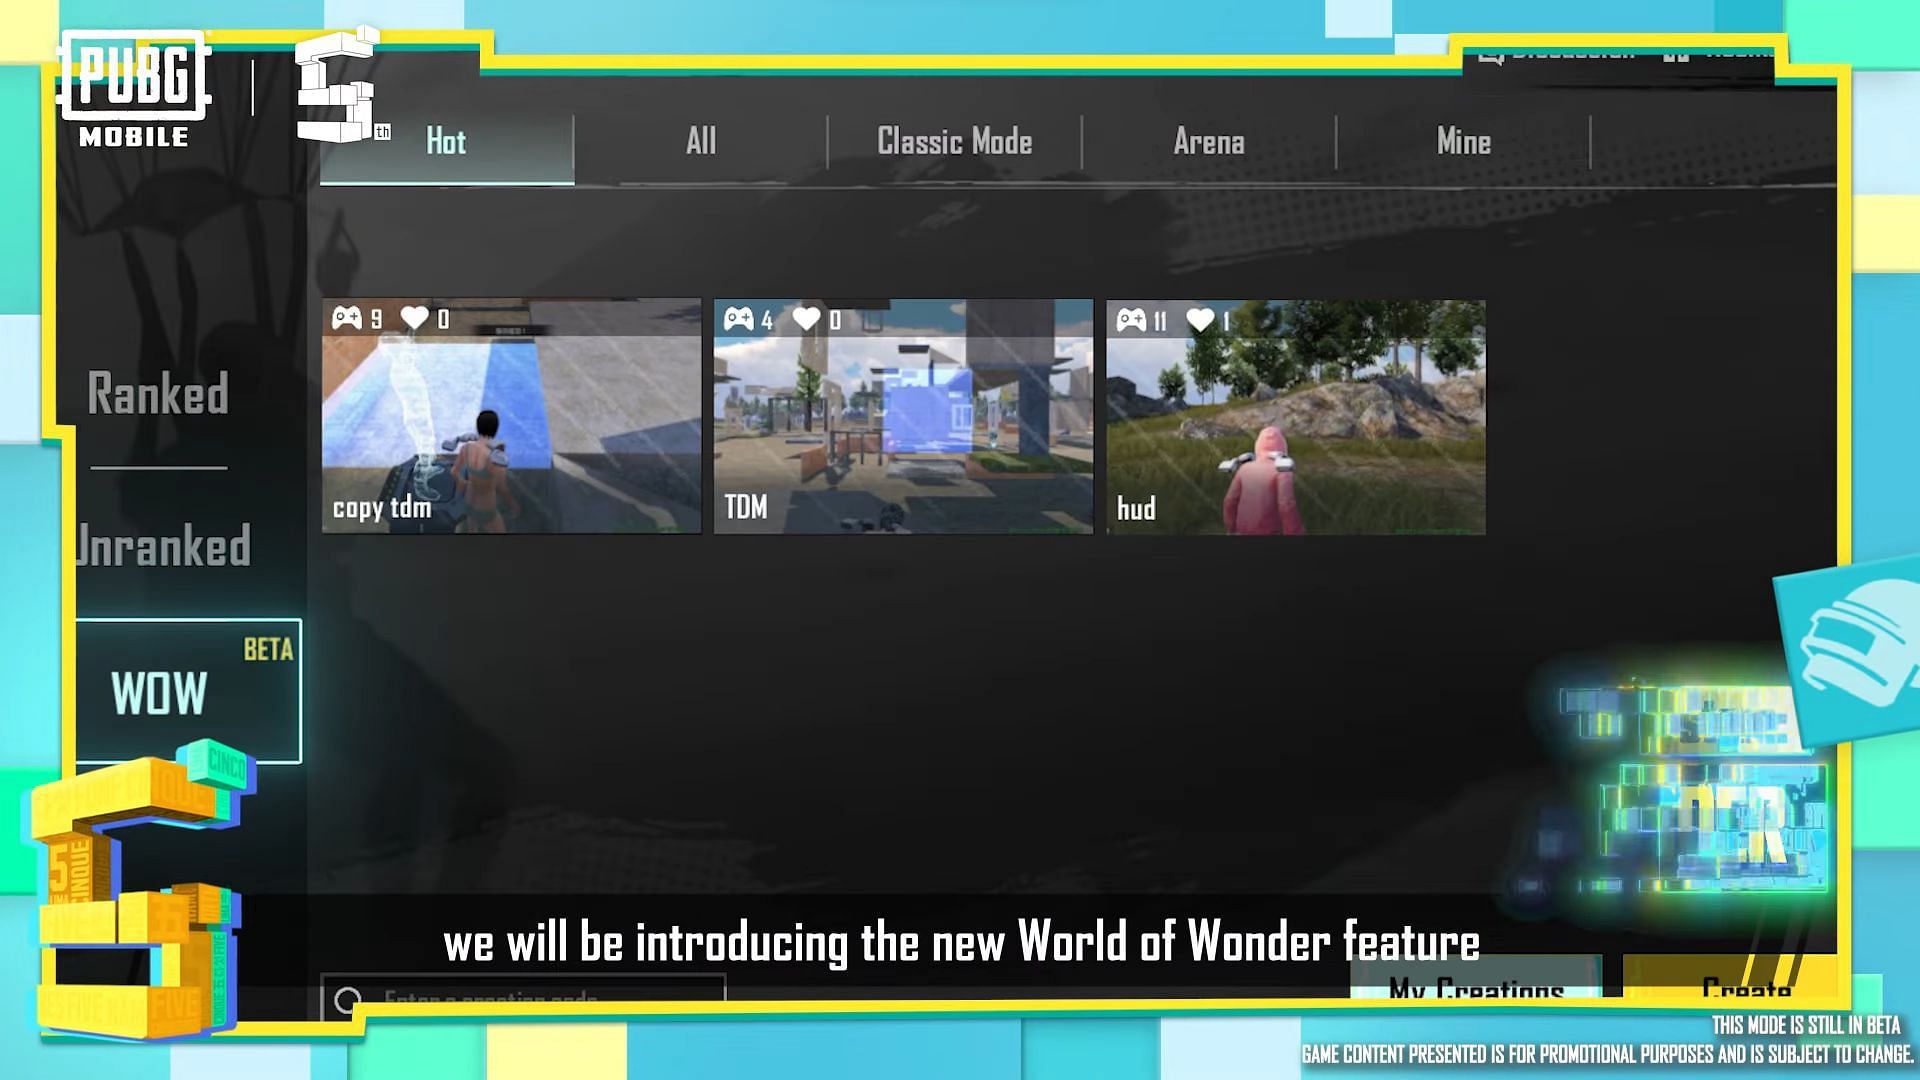 World of Wonder - New Gameplay System (Image via Tencent)